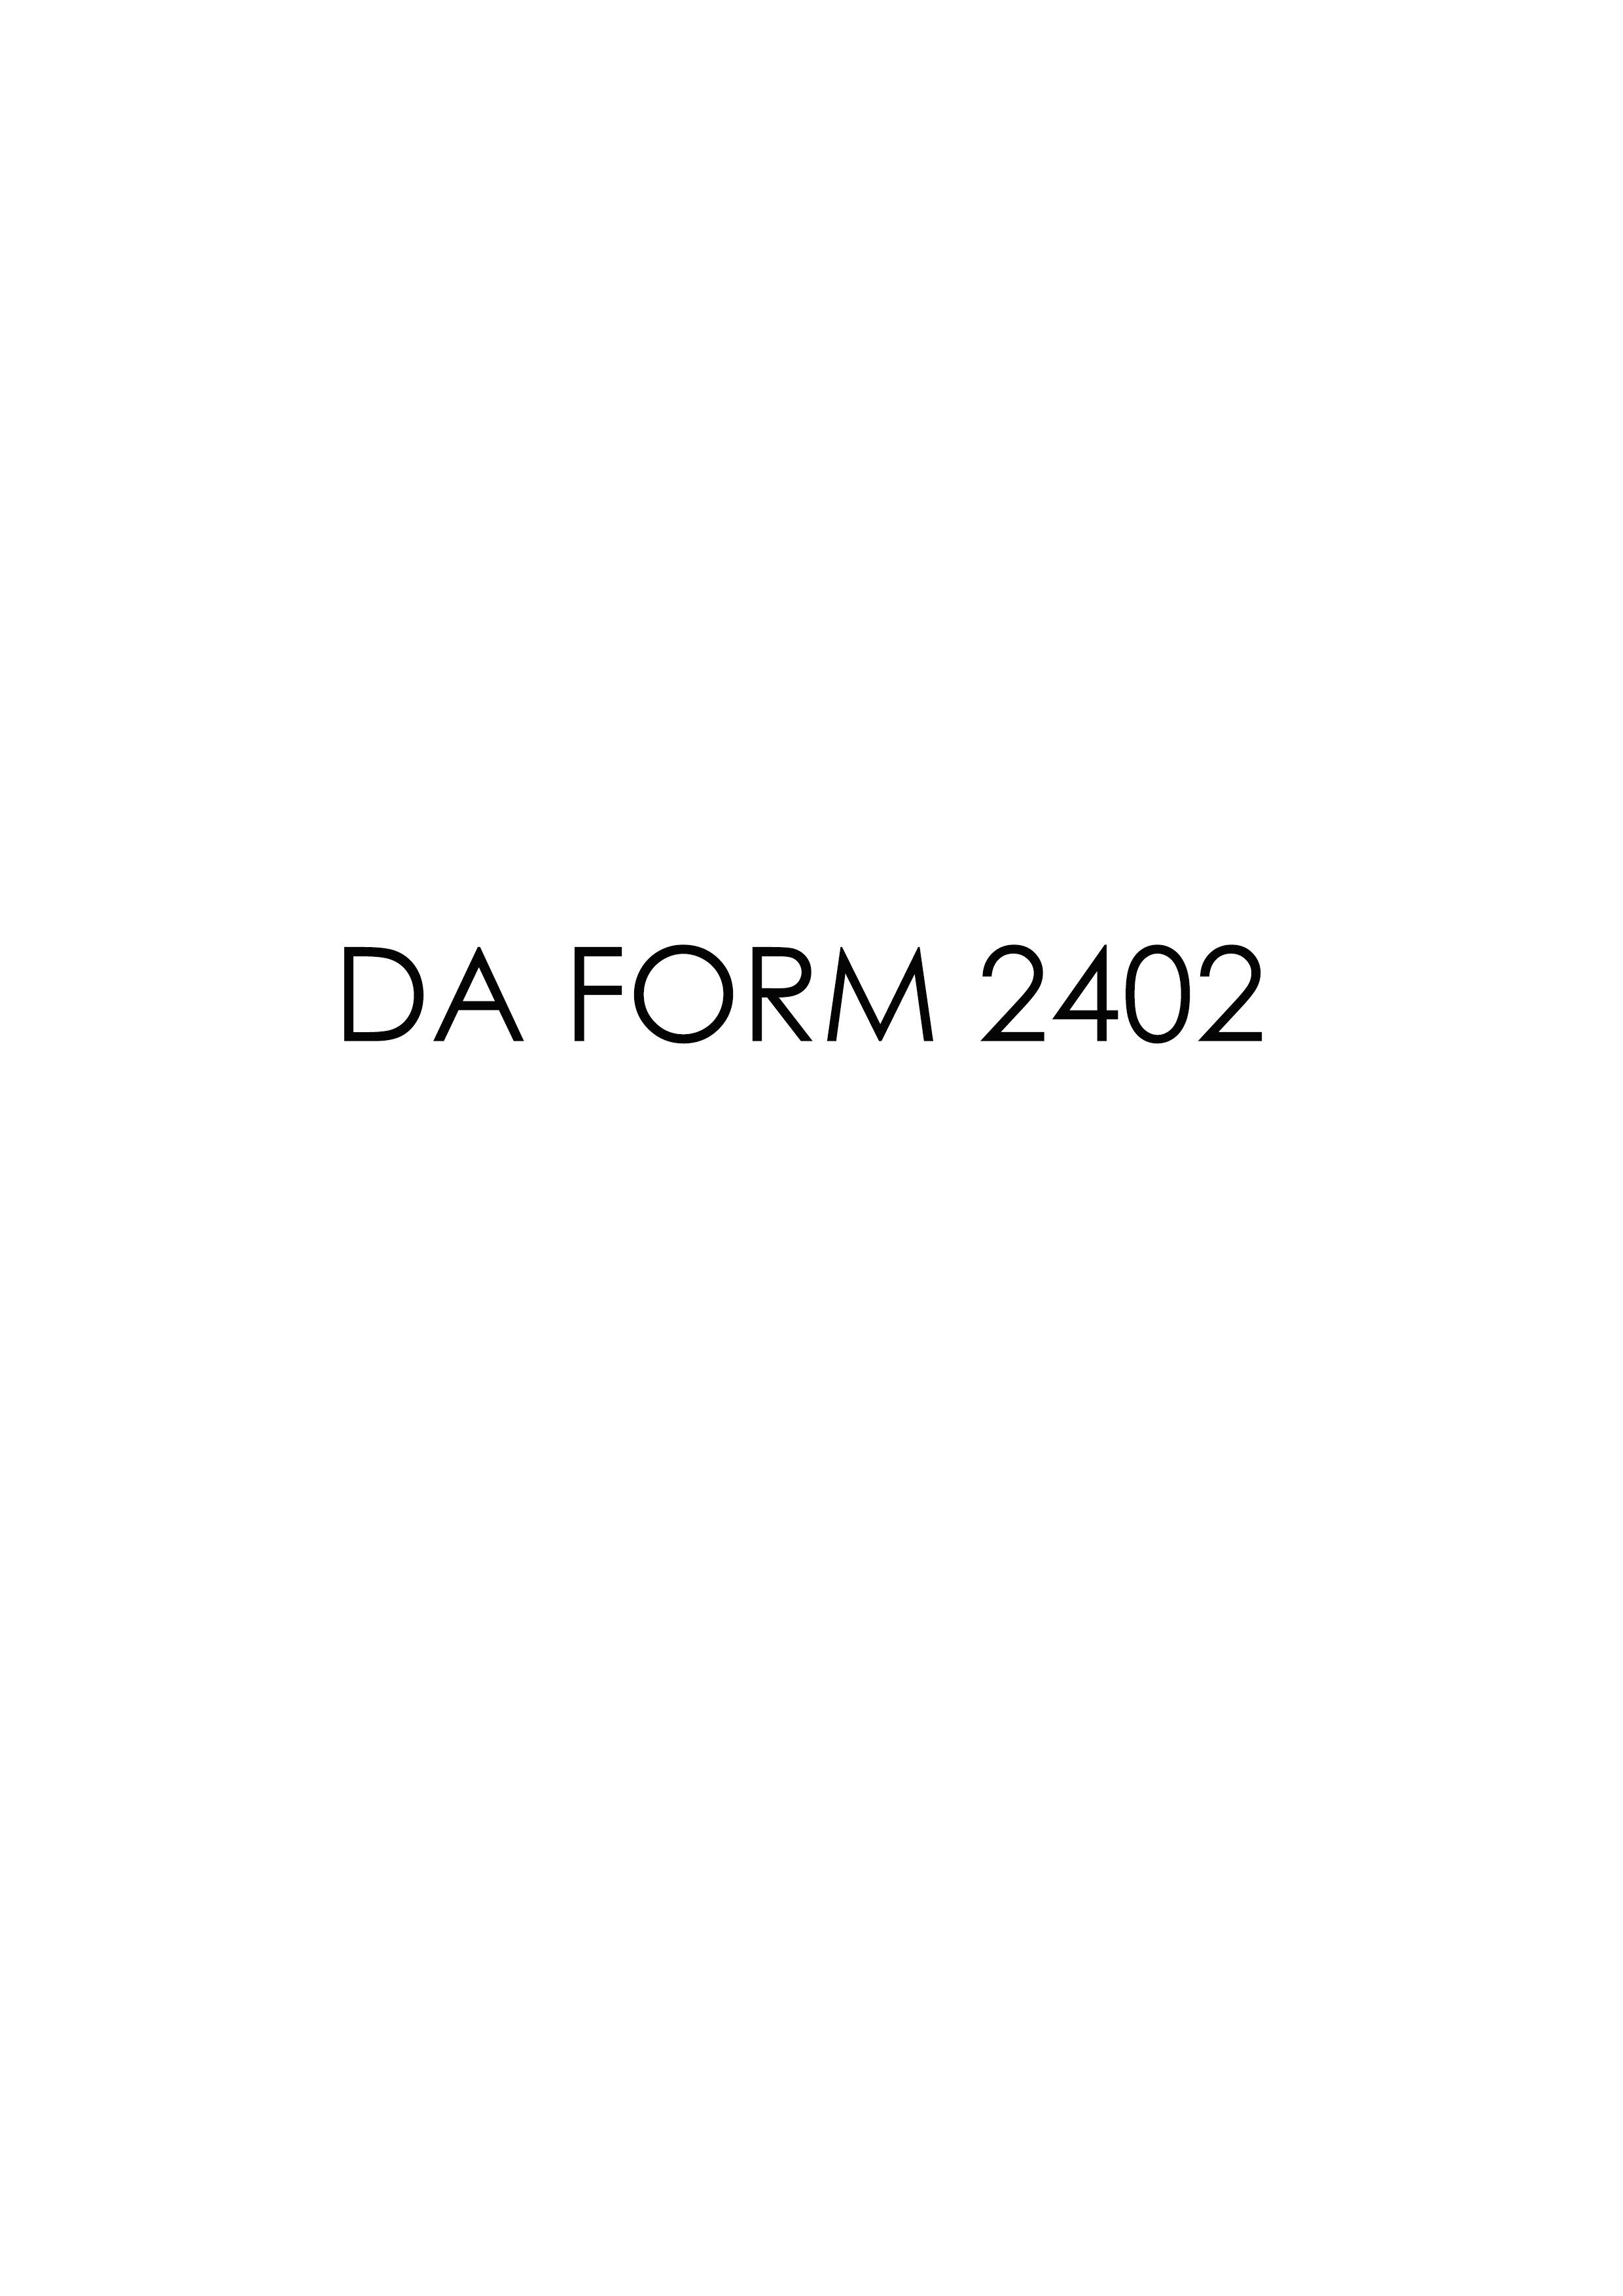 Download da form 2402